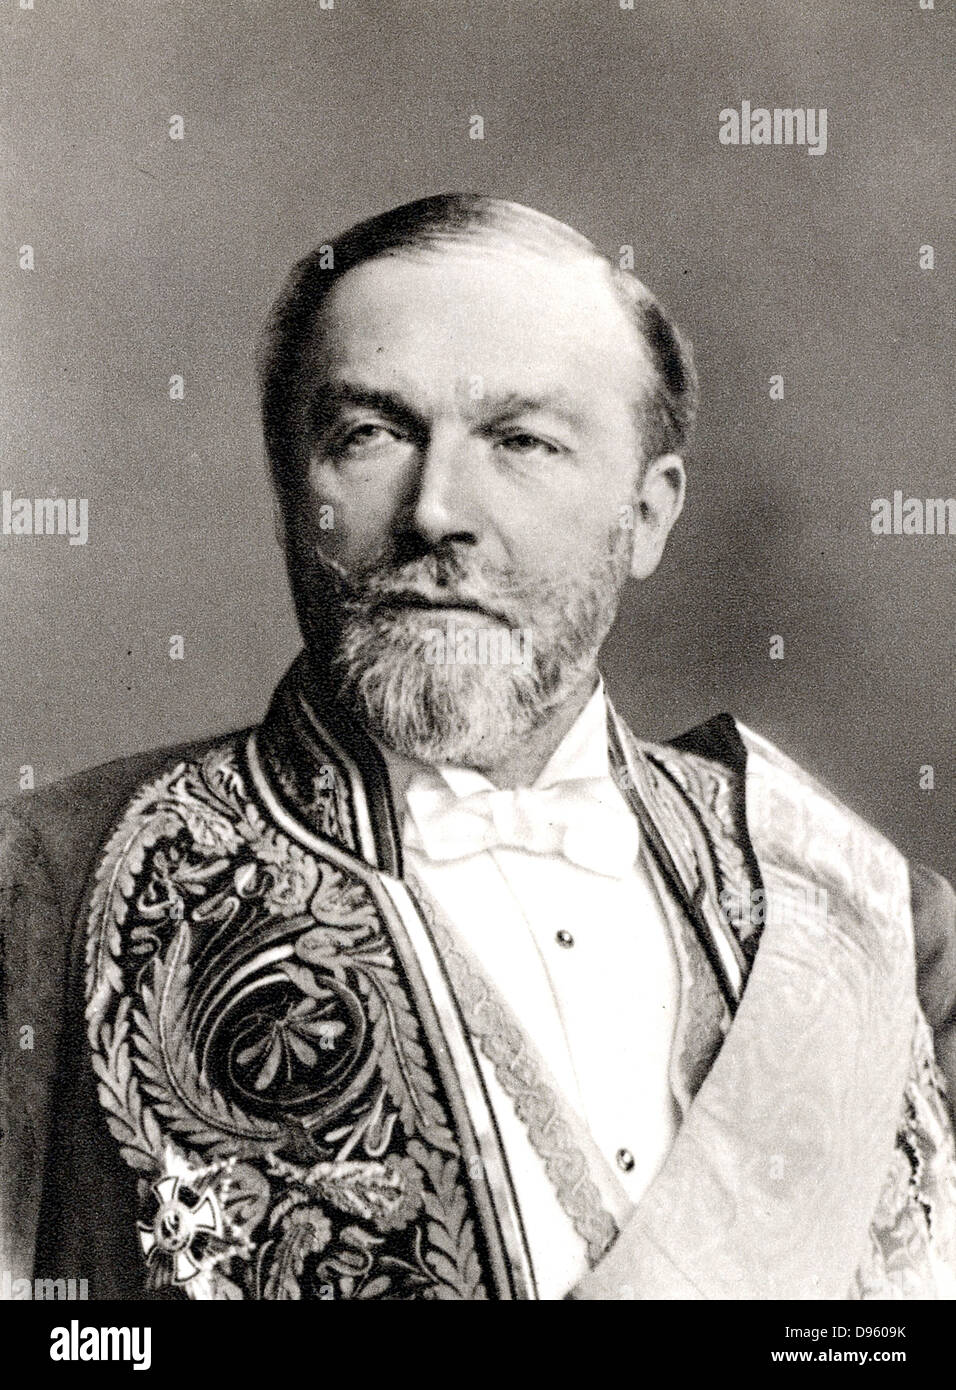 Philip Alexander zu Eulenburg-Hertefeld (1847-1921), uomo politico tedesco e diplomatico. Amico del Kaiser. Foto Stock